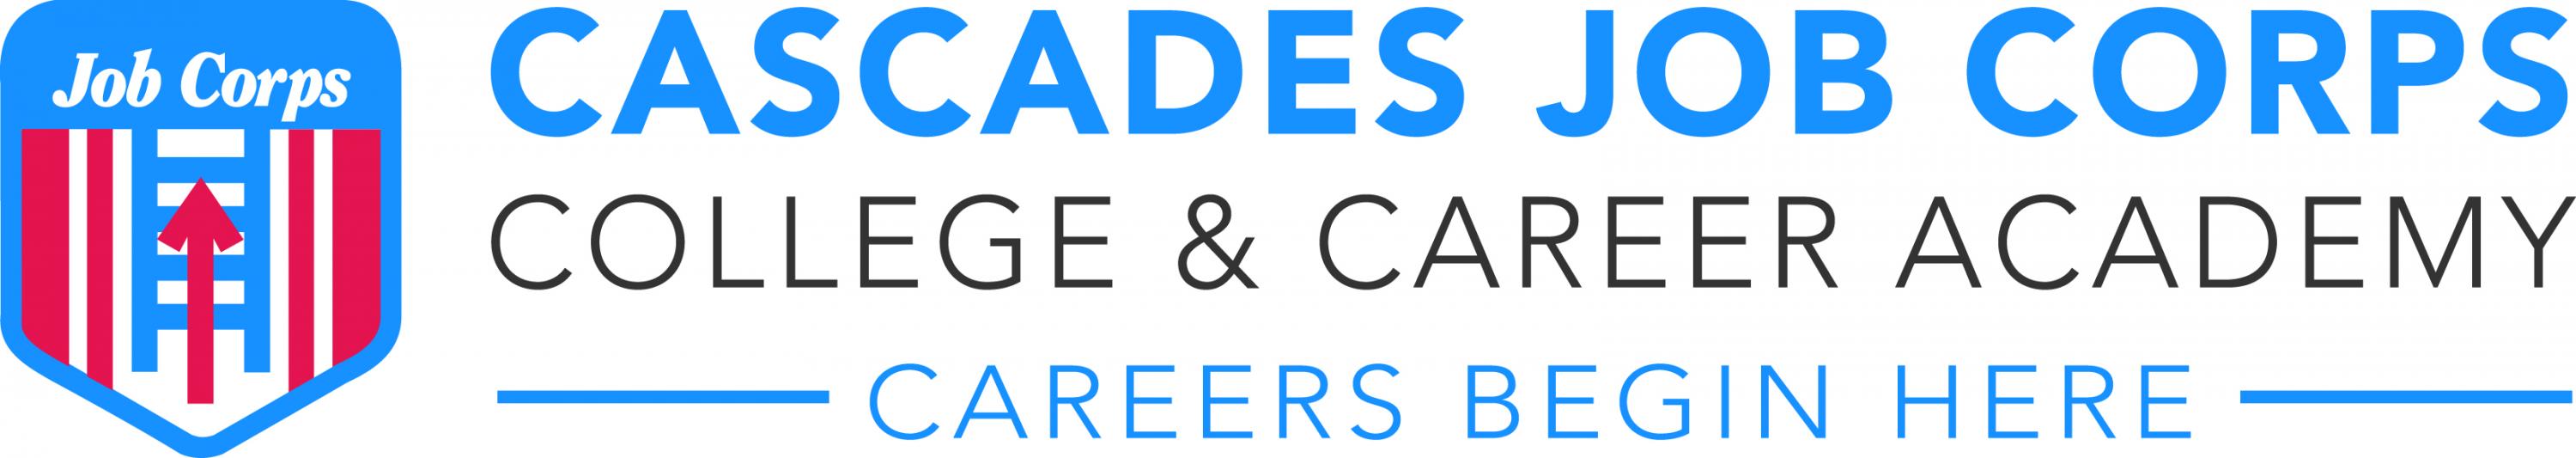 Cascades Job Corps College & Career Academy's Image